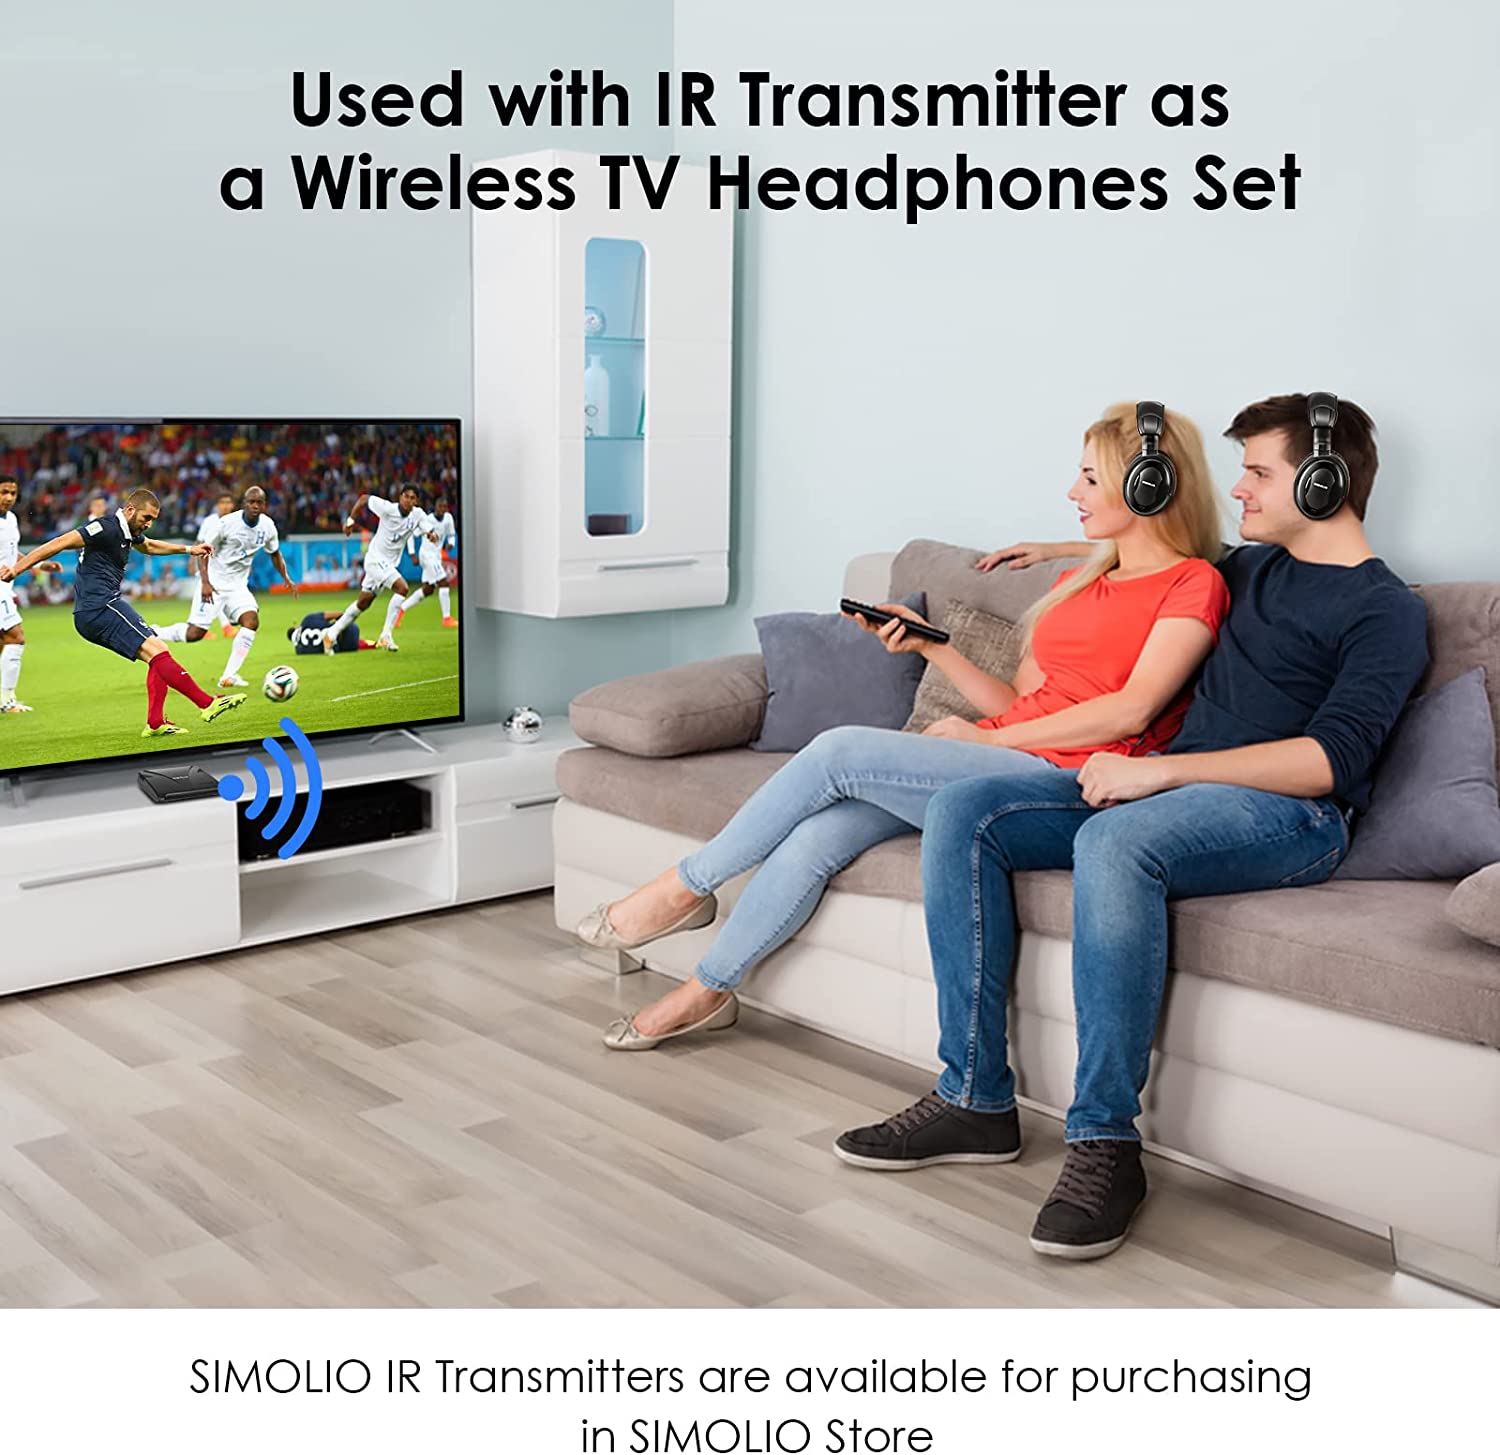 SIMOLIO 2 Channels Wireless Car Headphones Work with IR Transmitter on TV SM-568